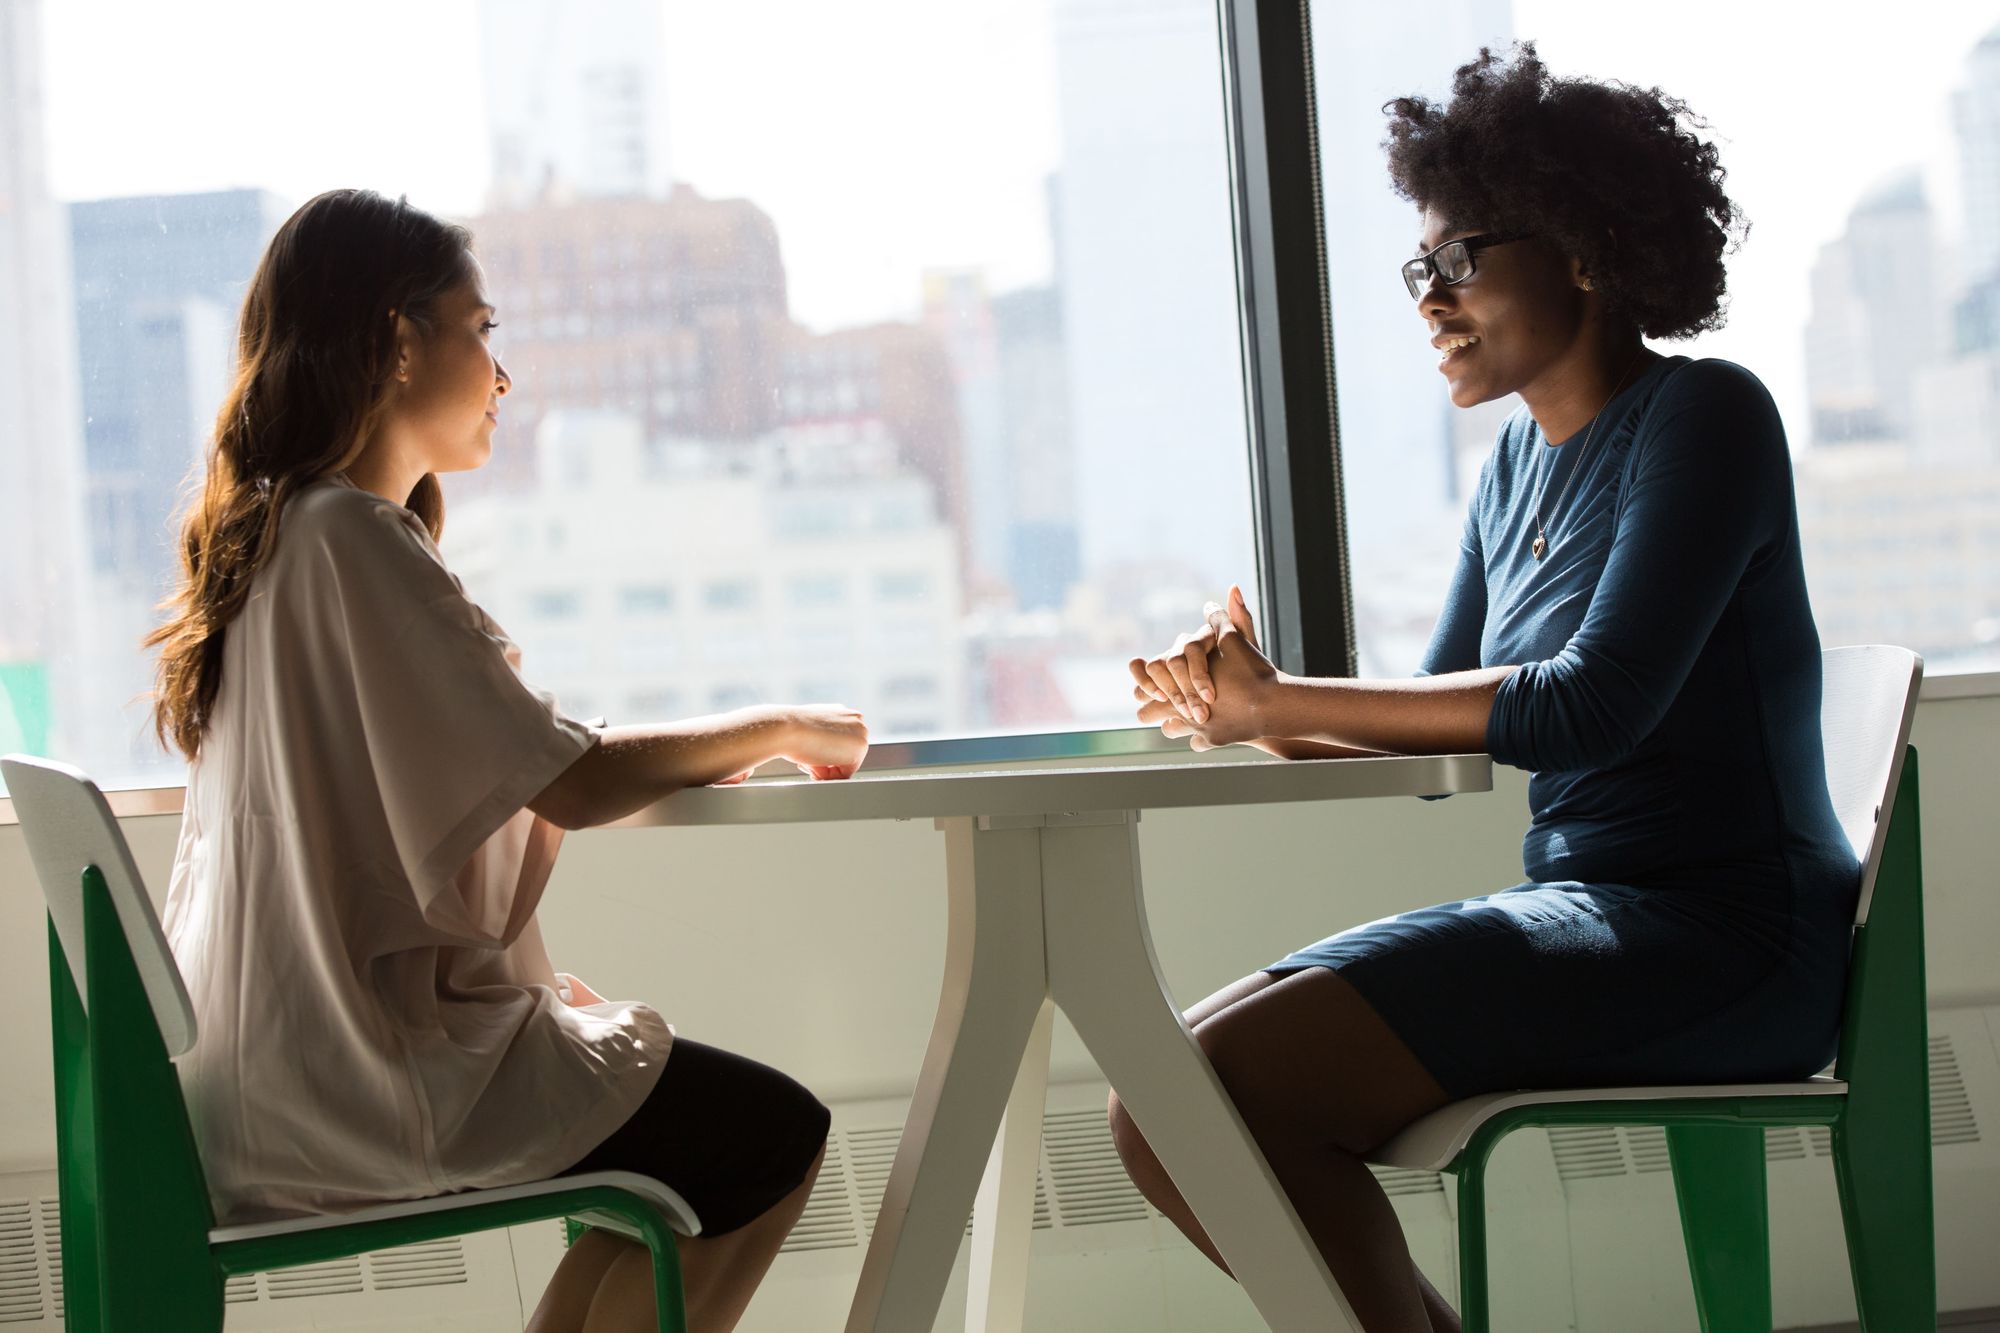 female mentoring relationship. two female employees. diverse workforce. sat talking together.